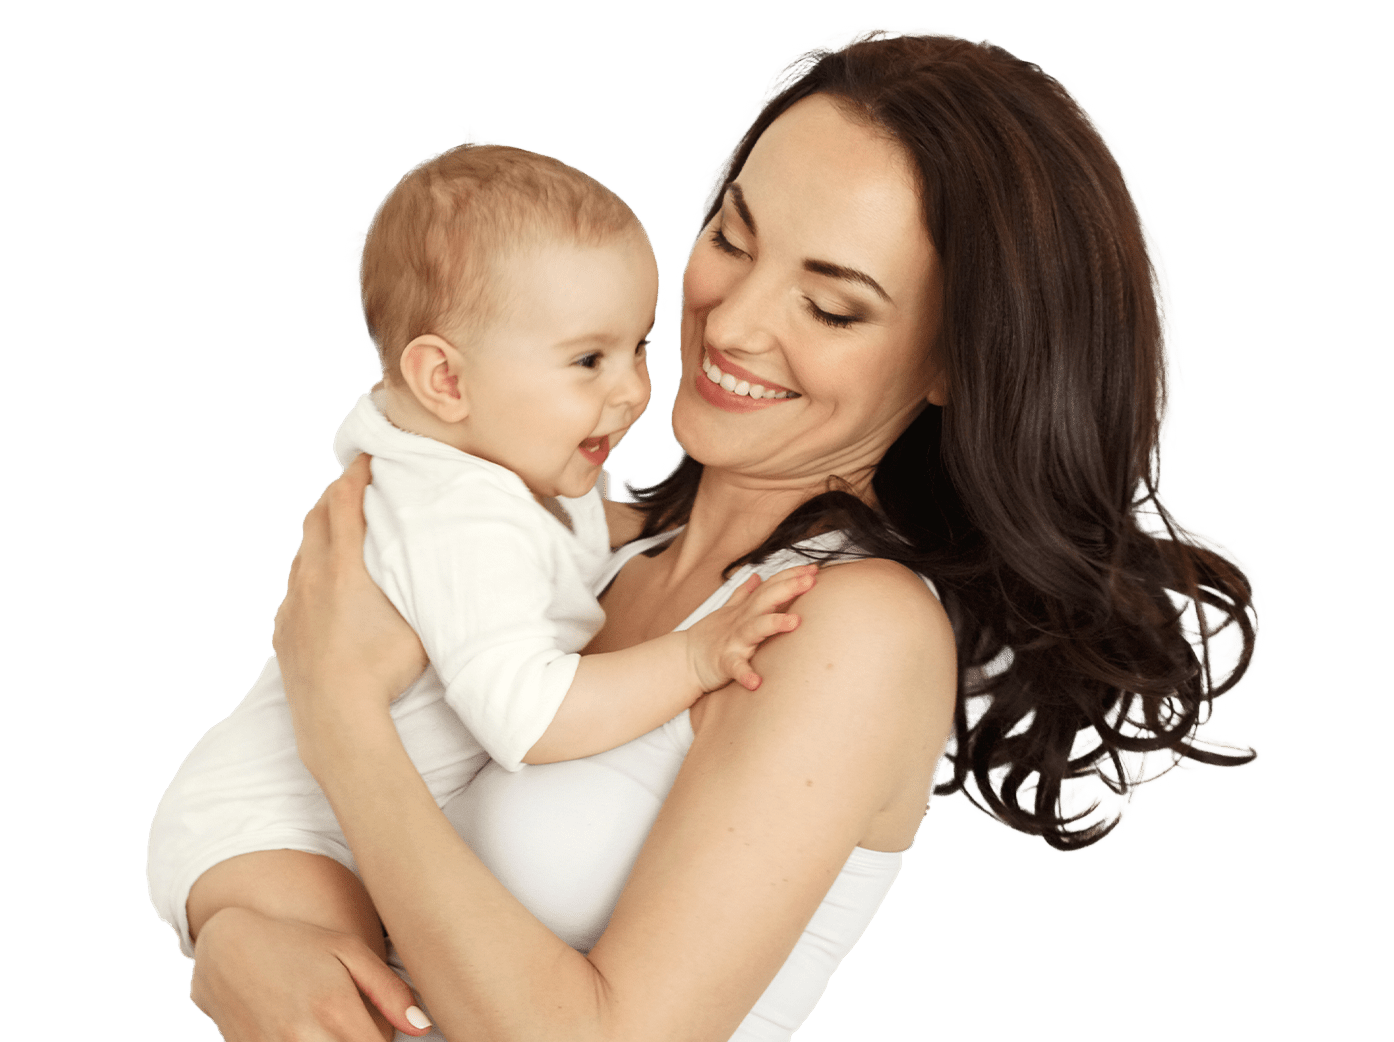 Woman holding infant baby both wearing white shirt